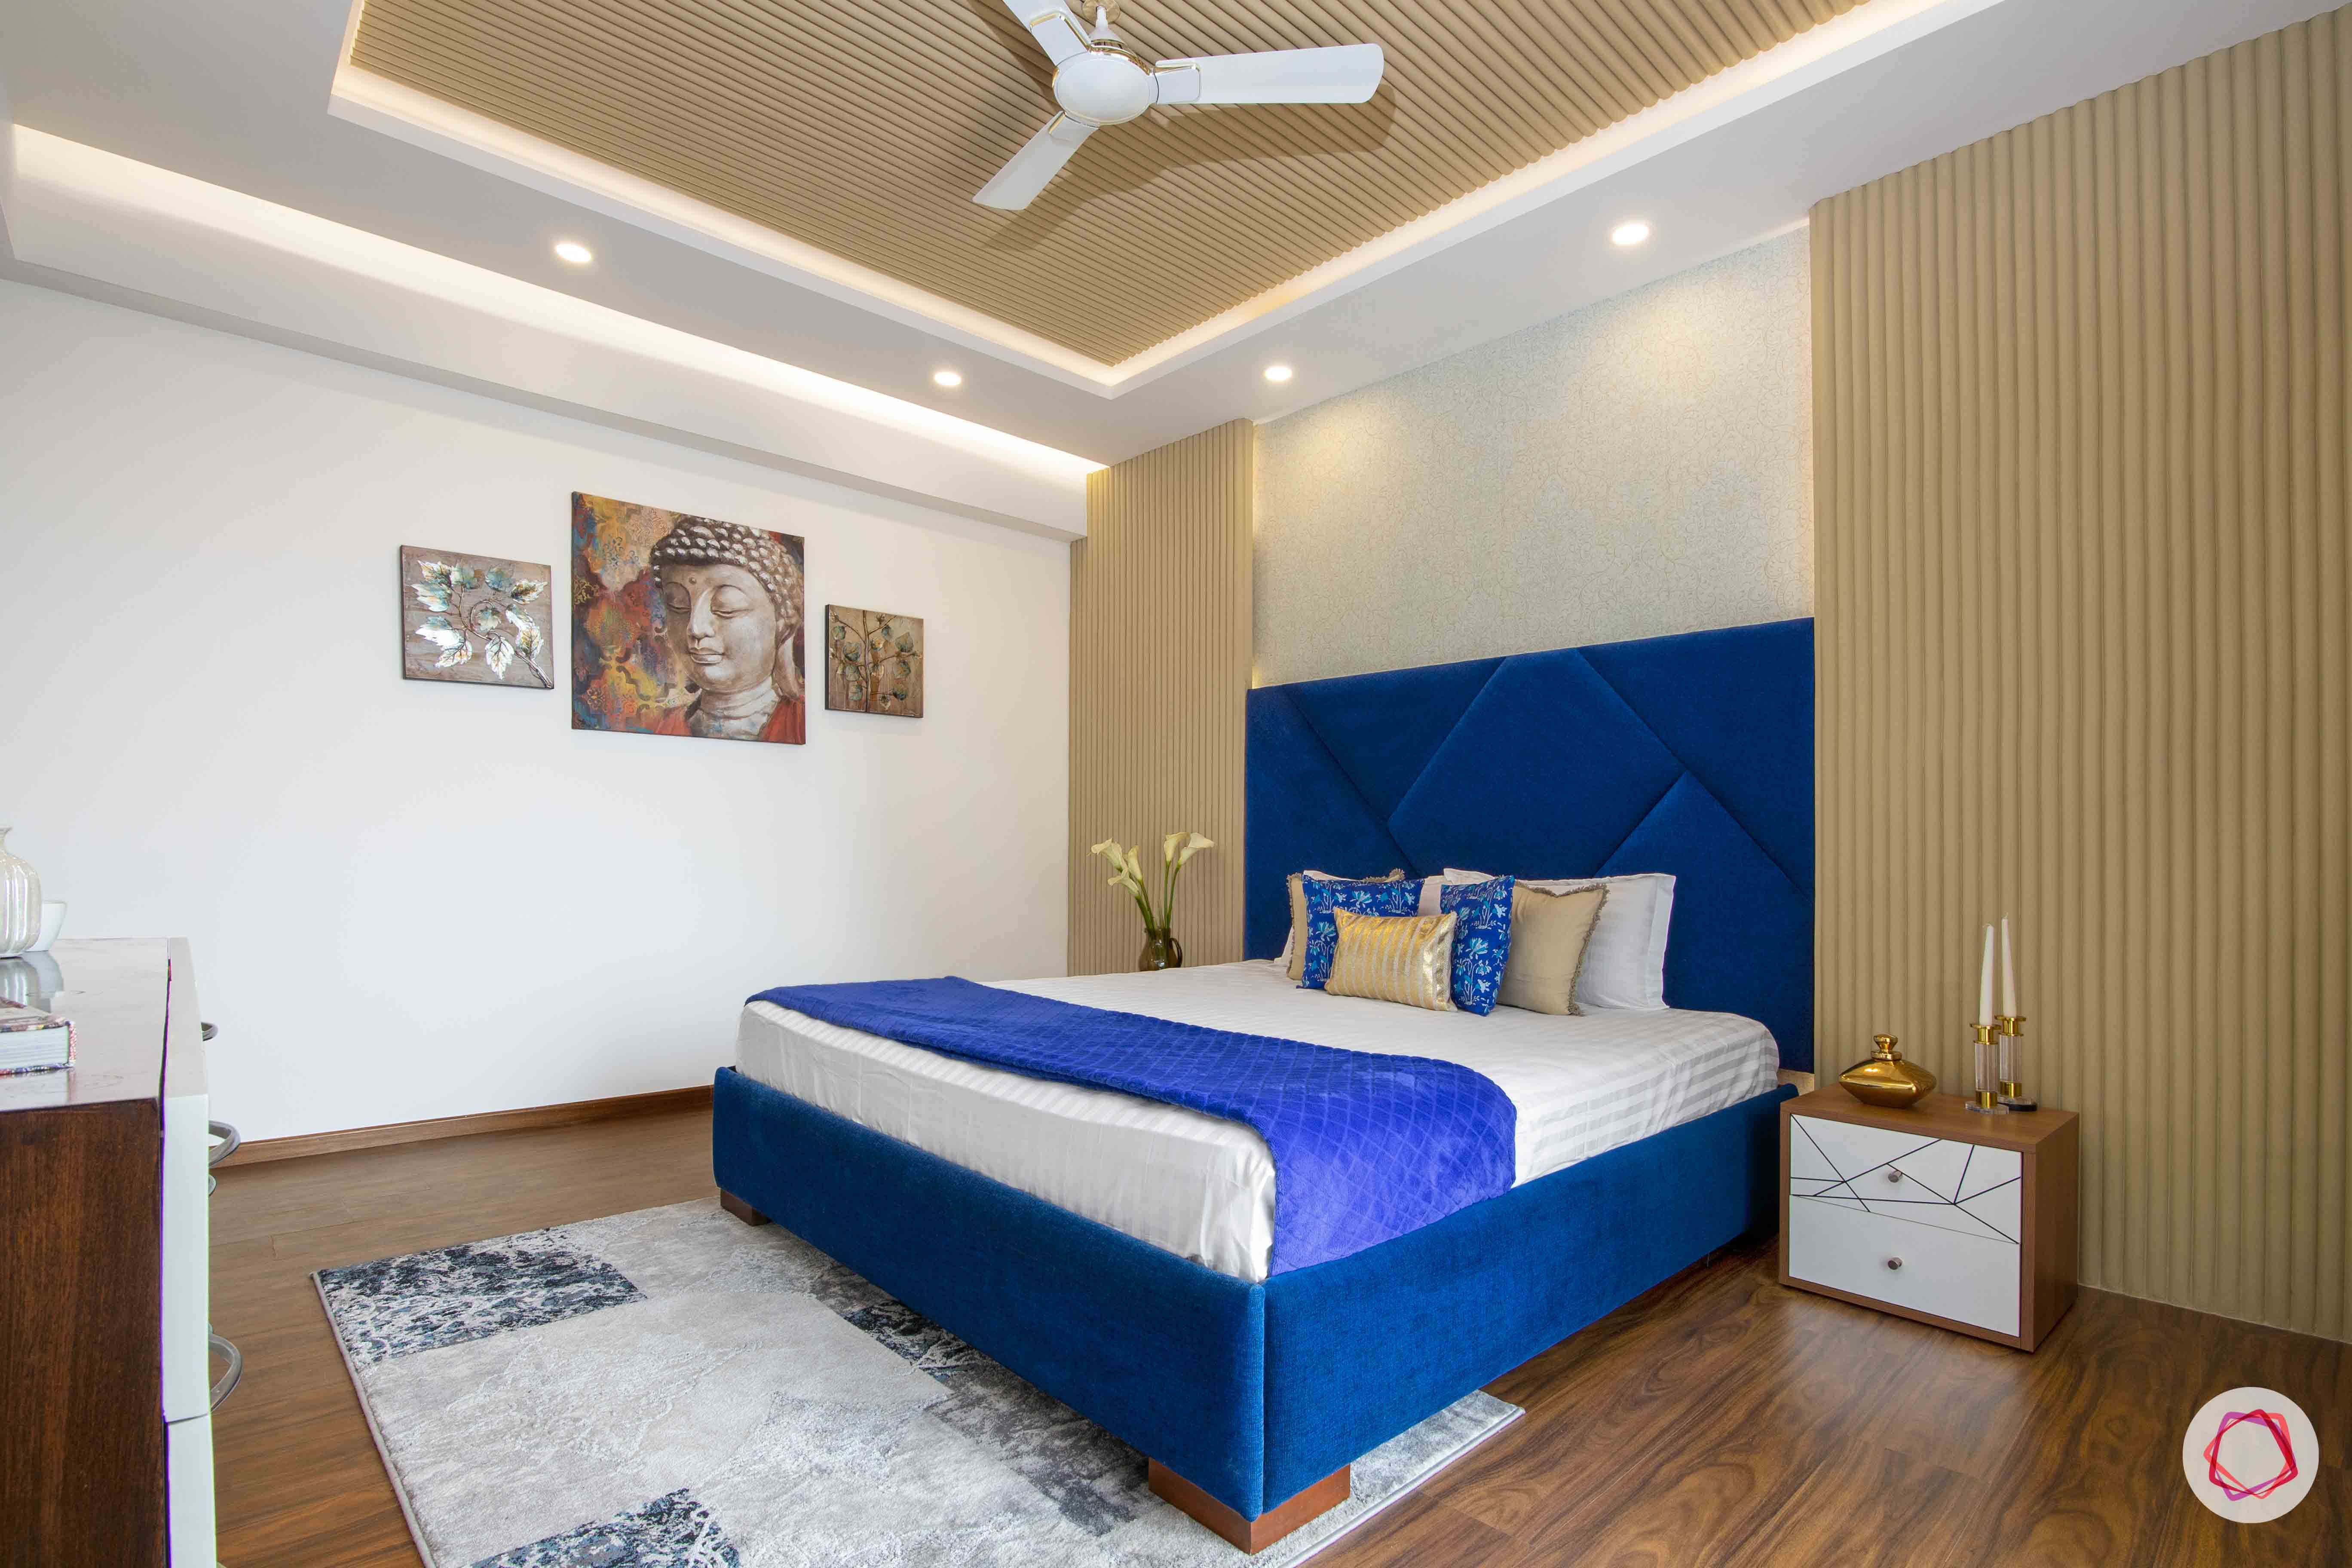 3 bedroom flat design-master bedroom design-wall panelling- blue headboard
